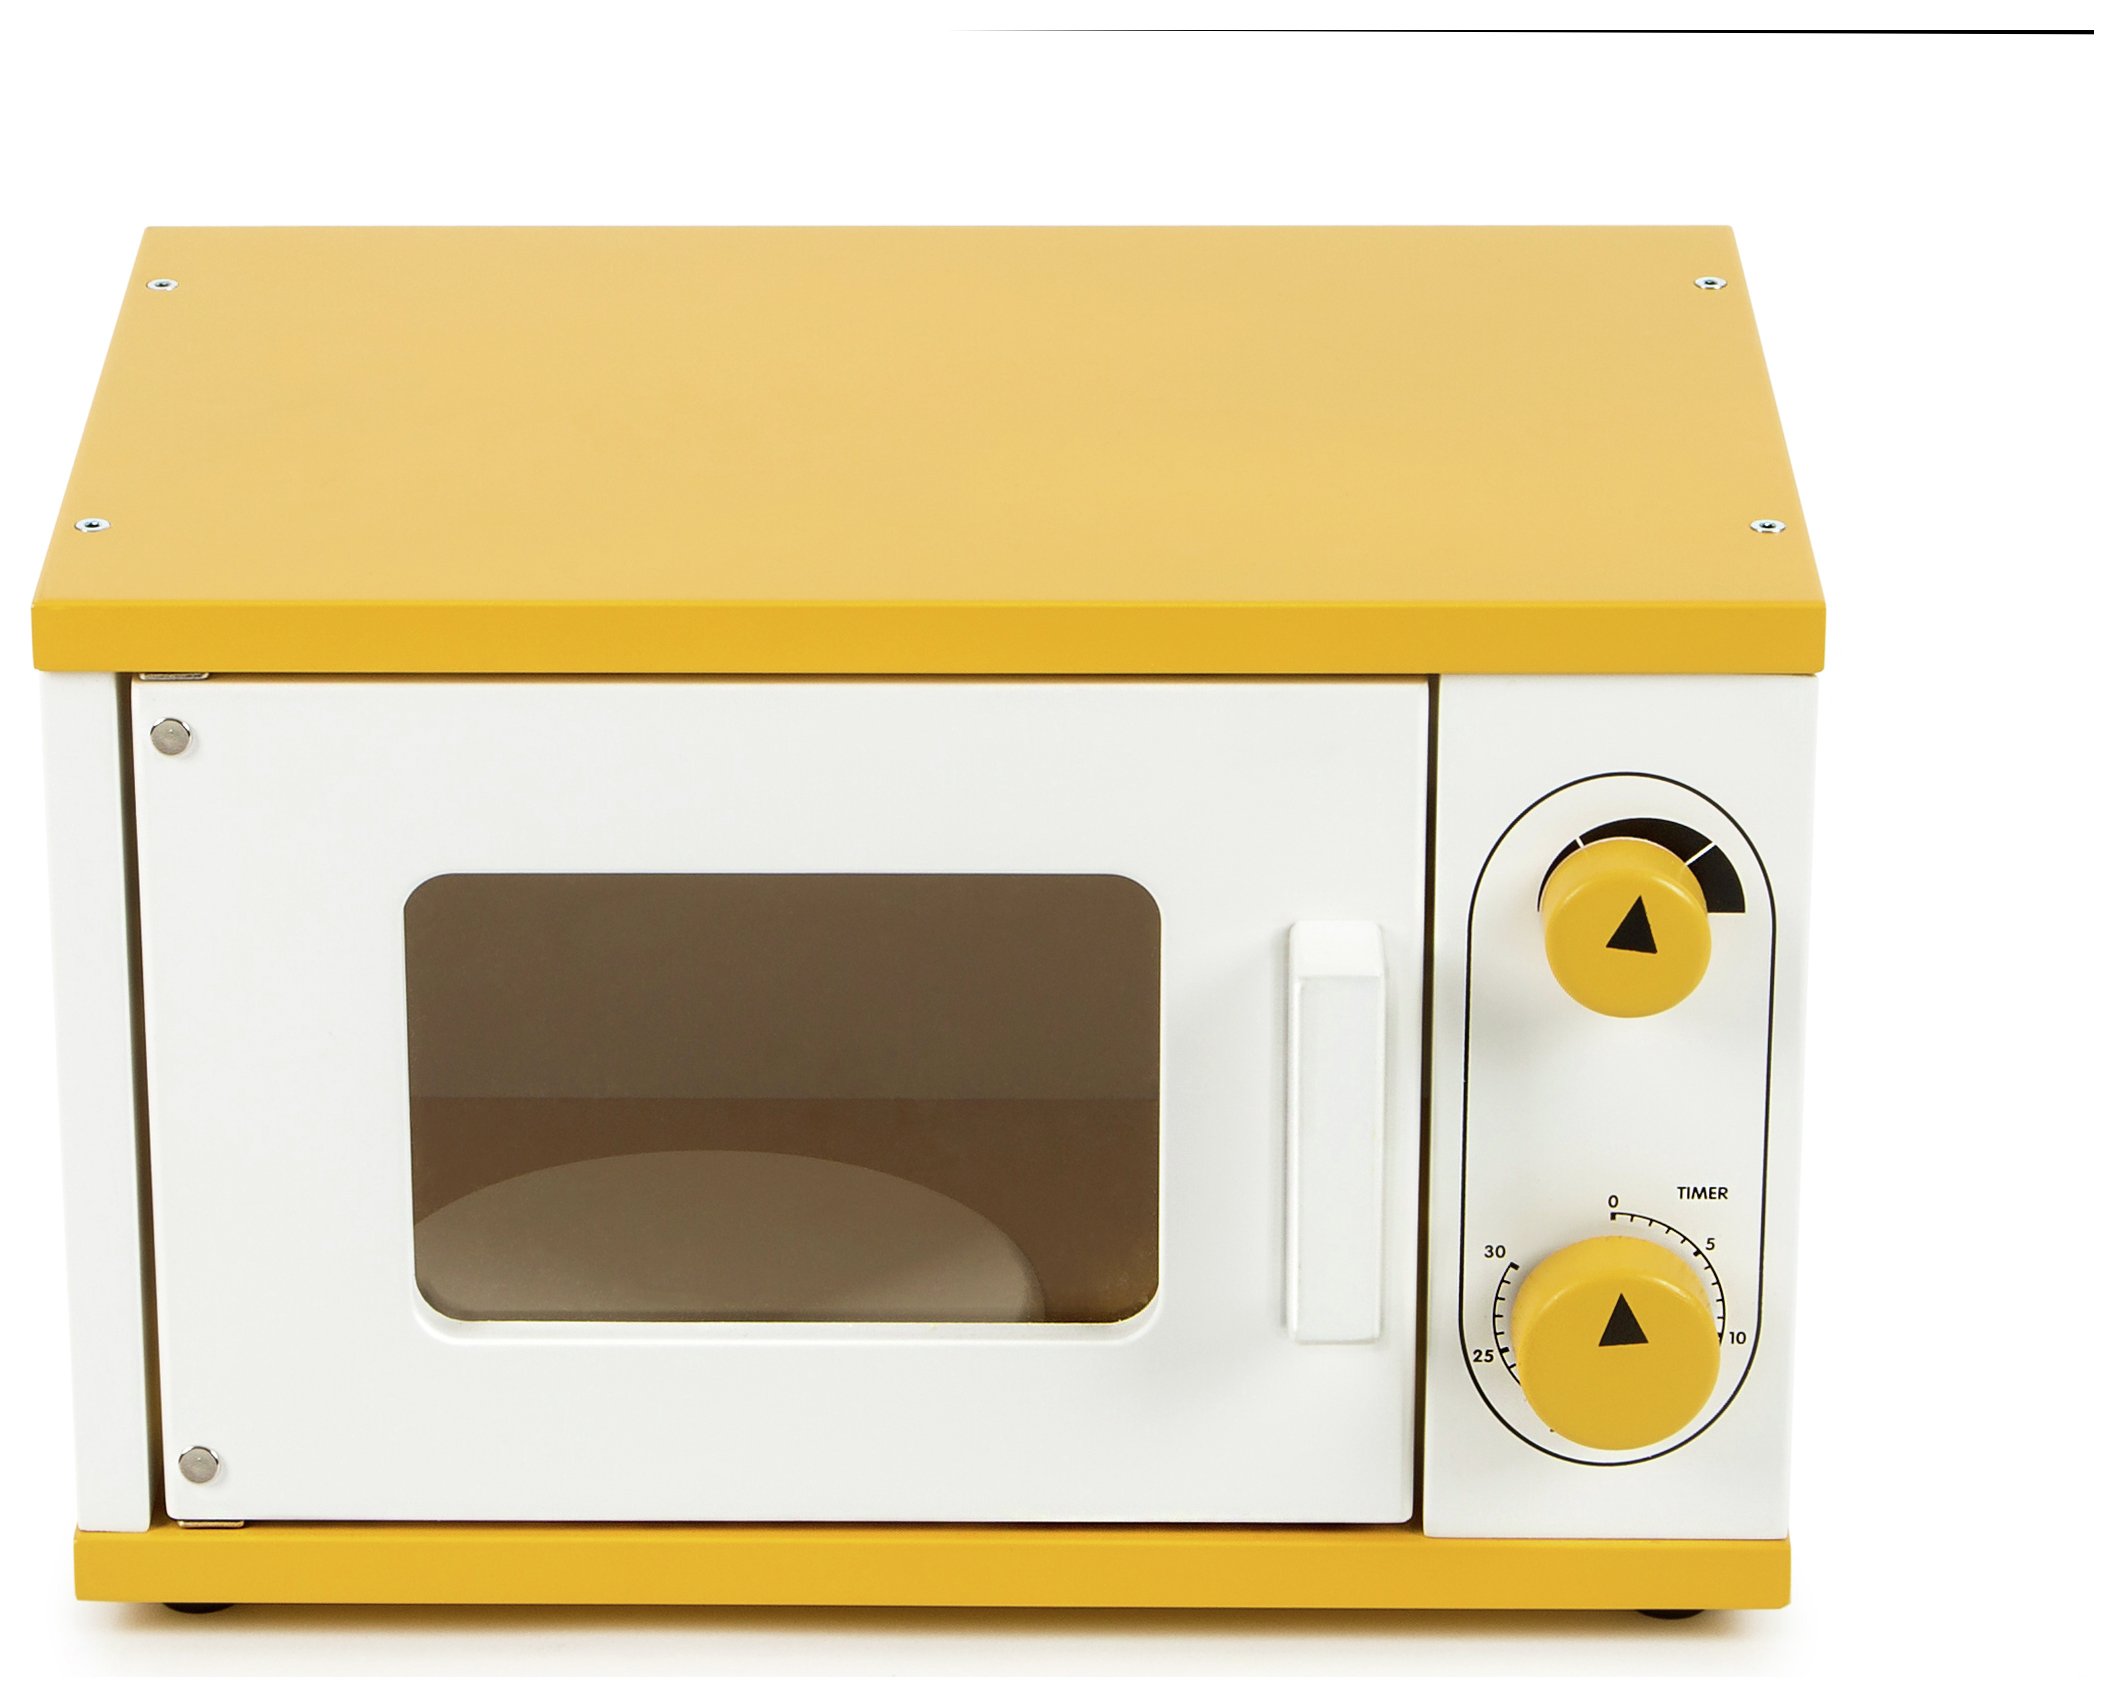 Tidlo Toy Microwave.